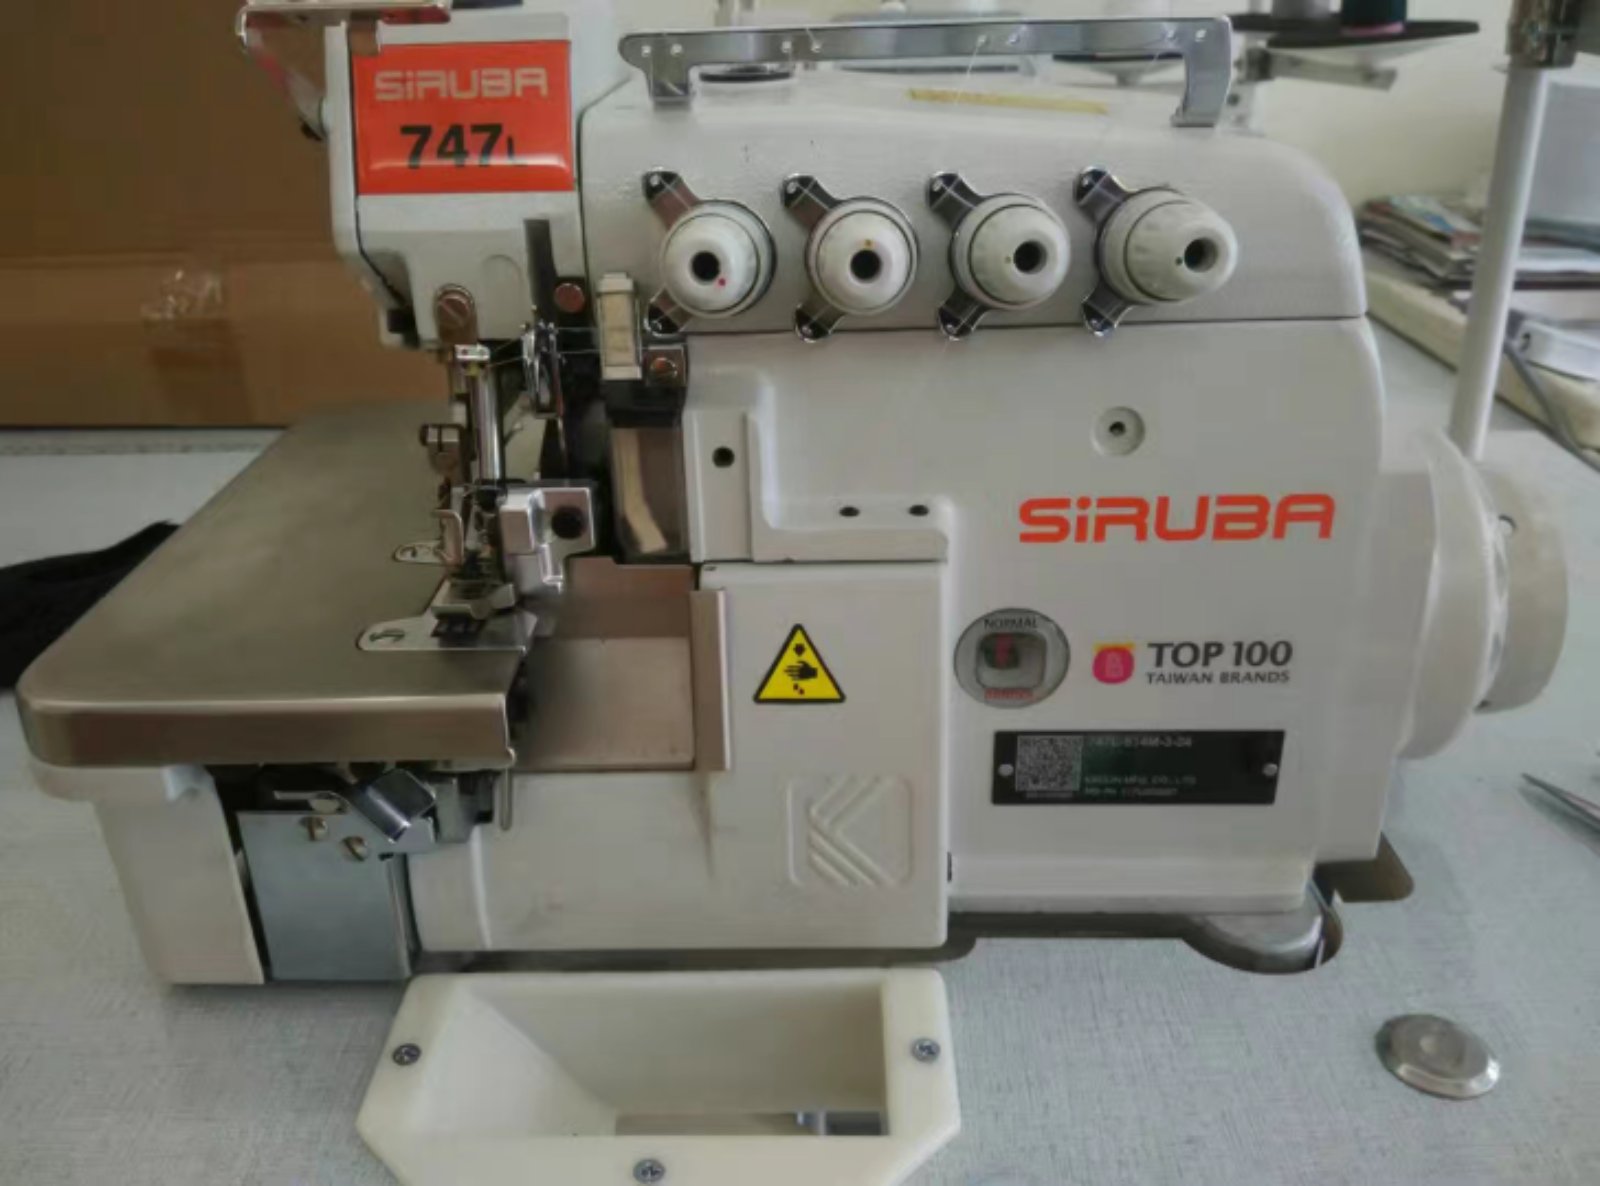 Special.Siruba Overlock Sewing Machine